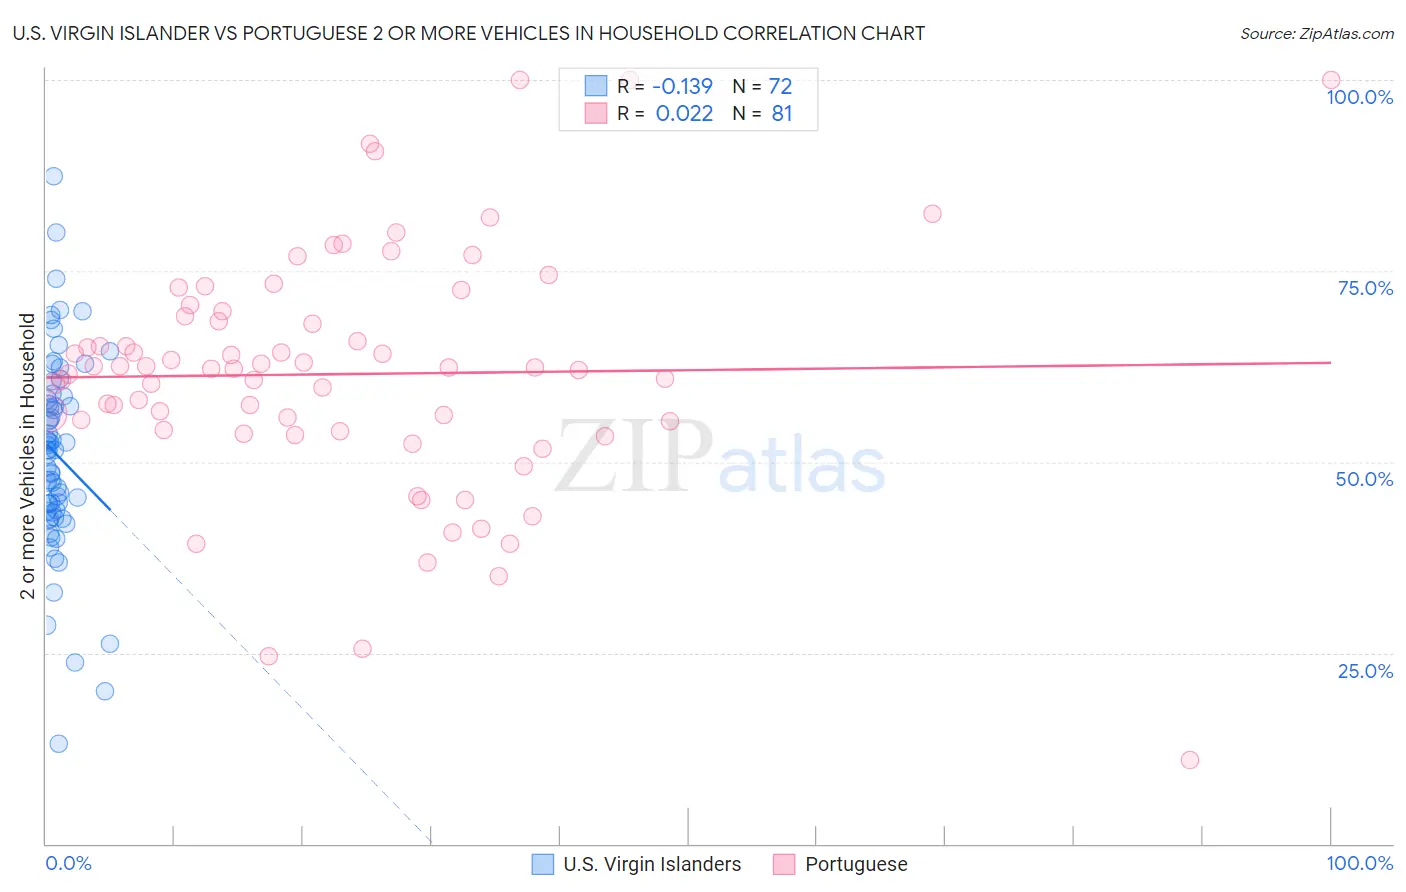 U.S. Virgin Islander vs Portuguese 2 or more Vehicles in Household